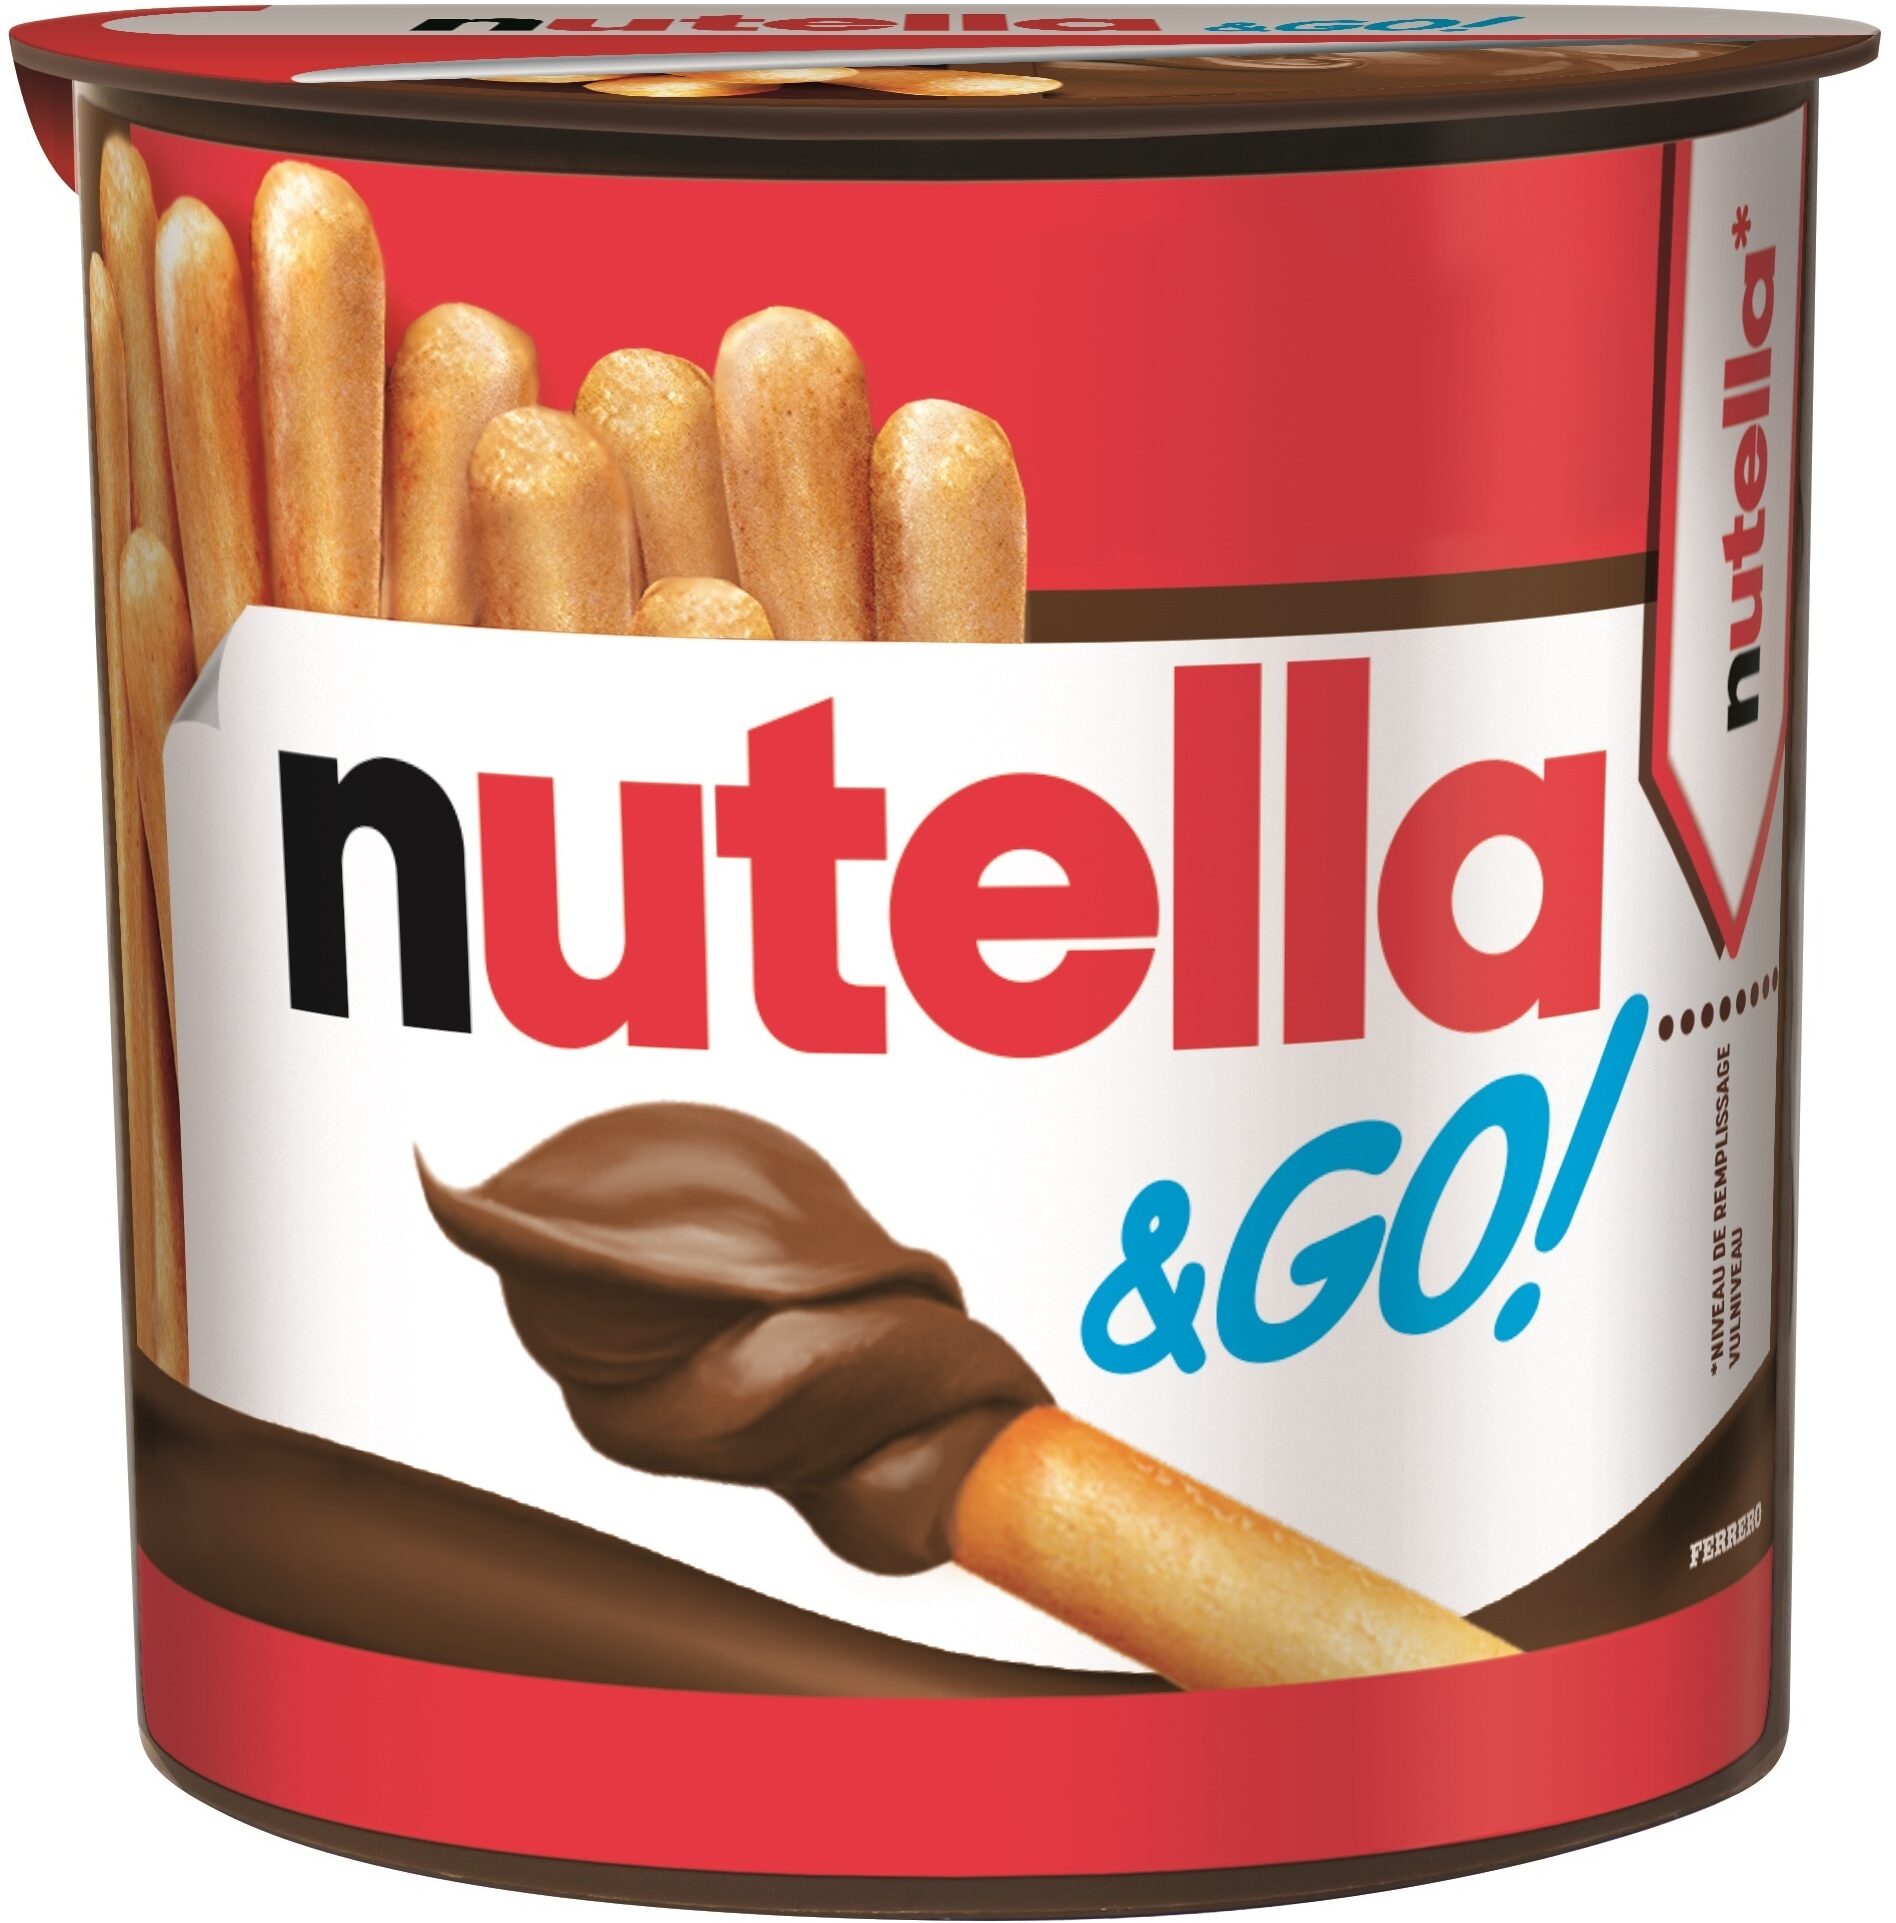 Kinder Nutella & CO 52gr - 1,70 Euro - Produit